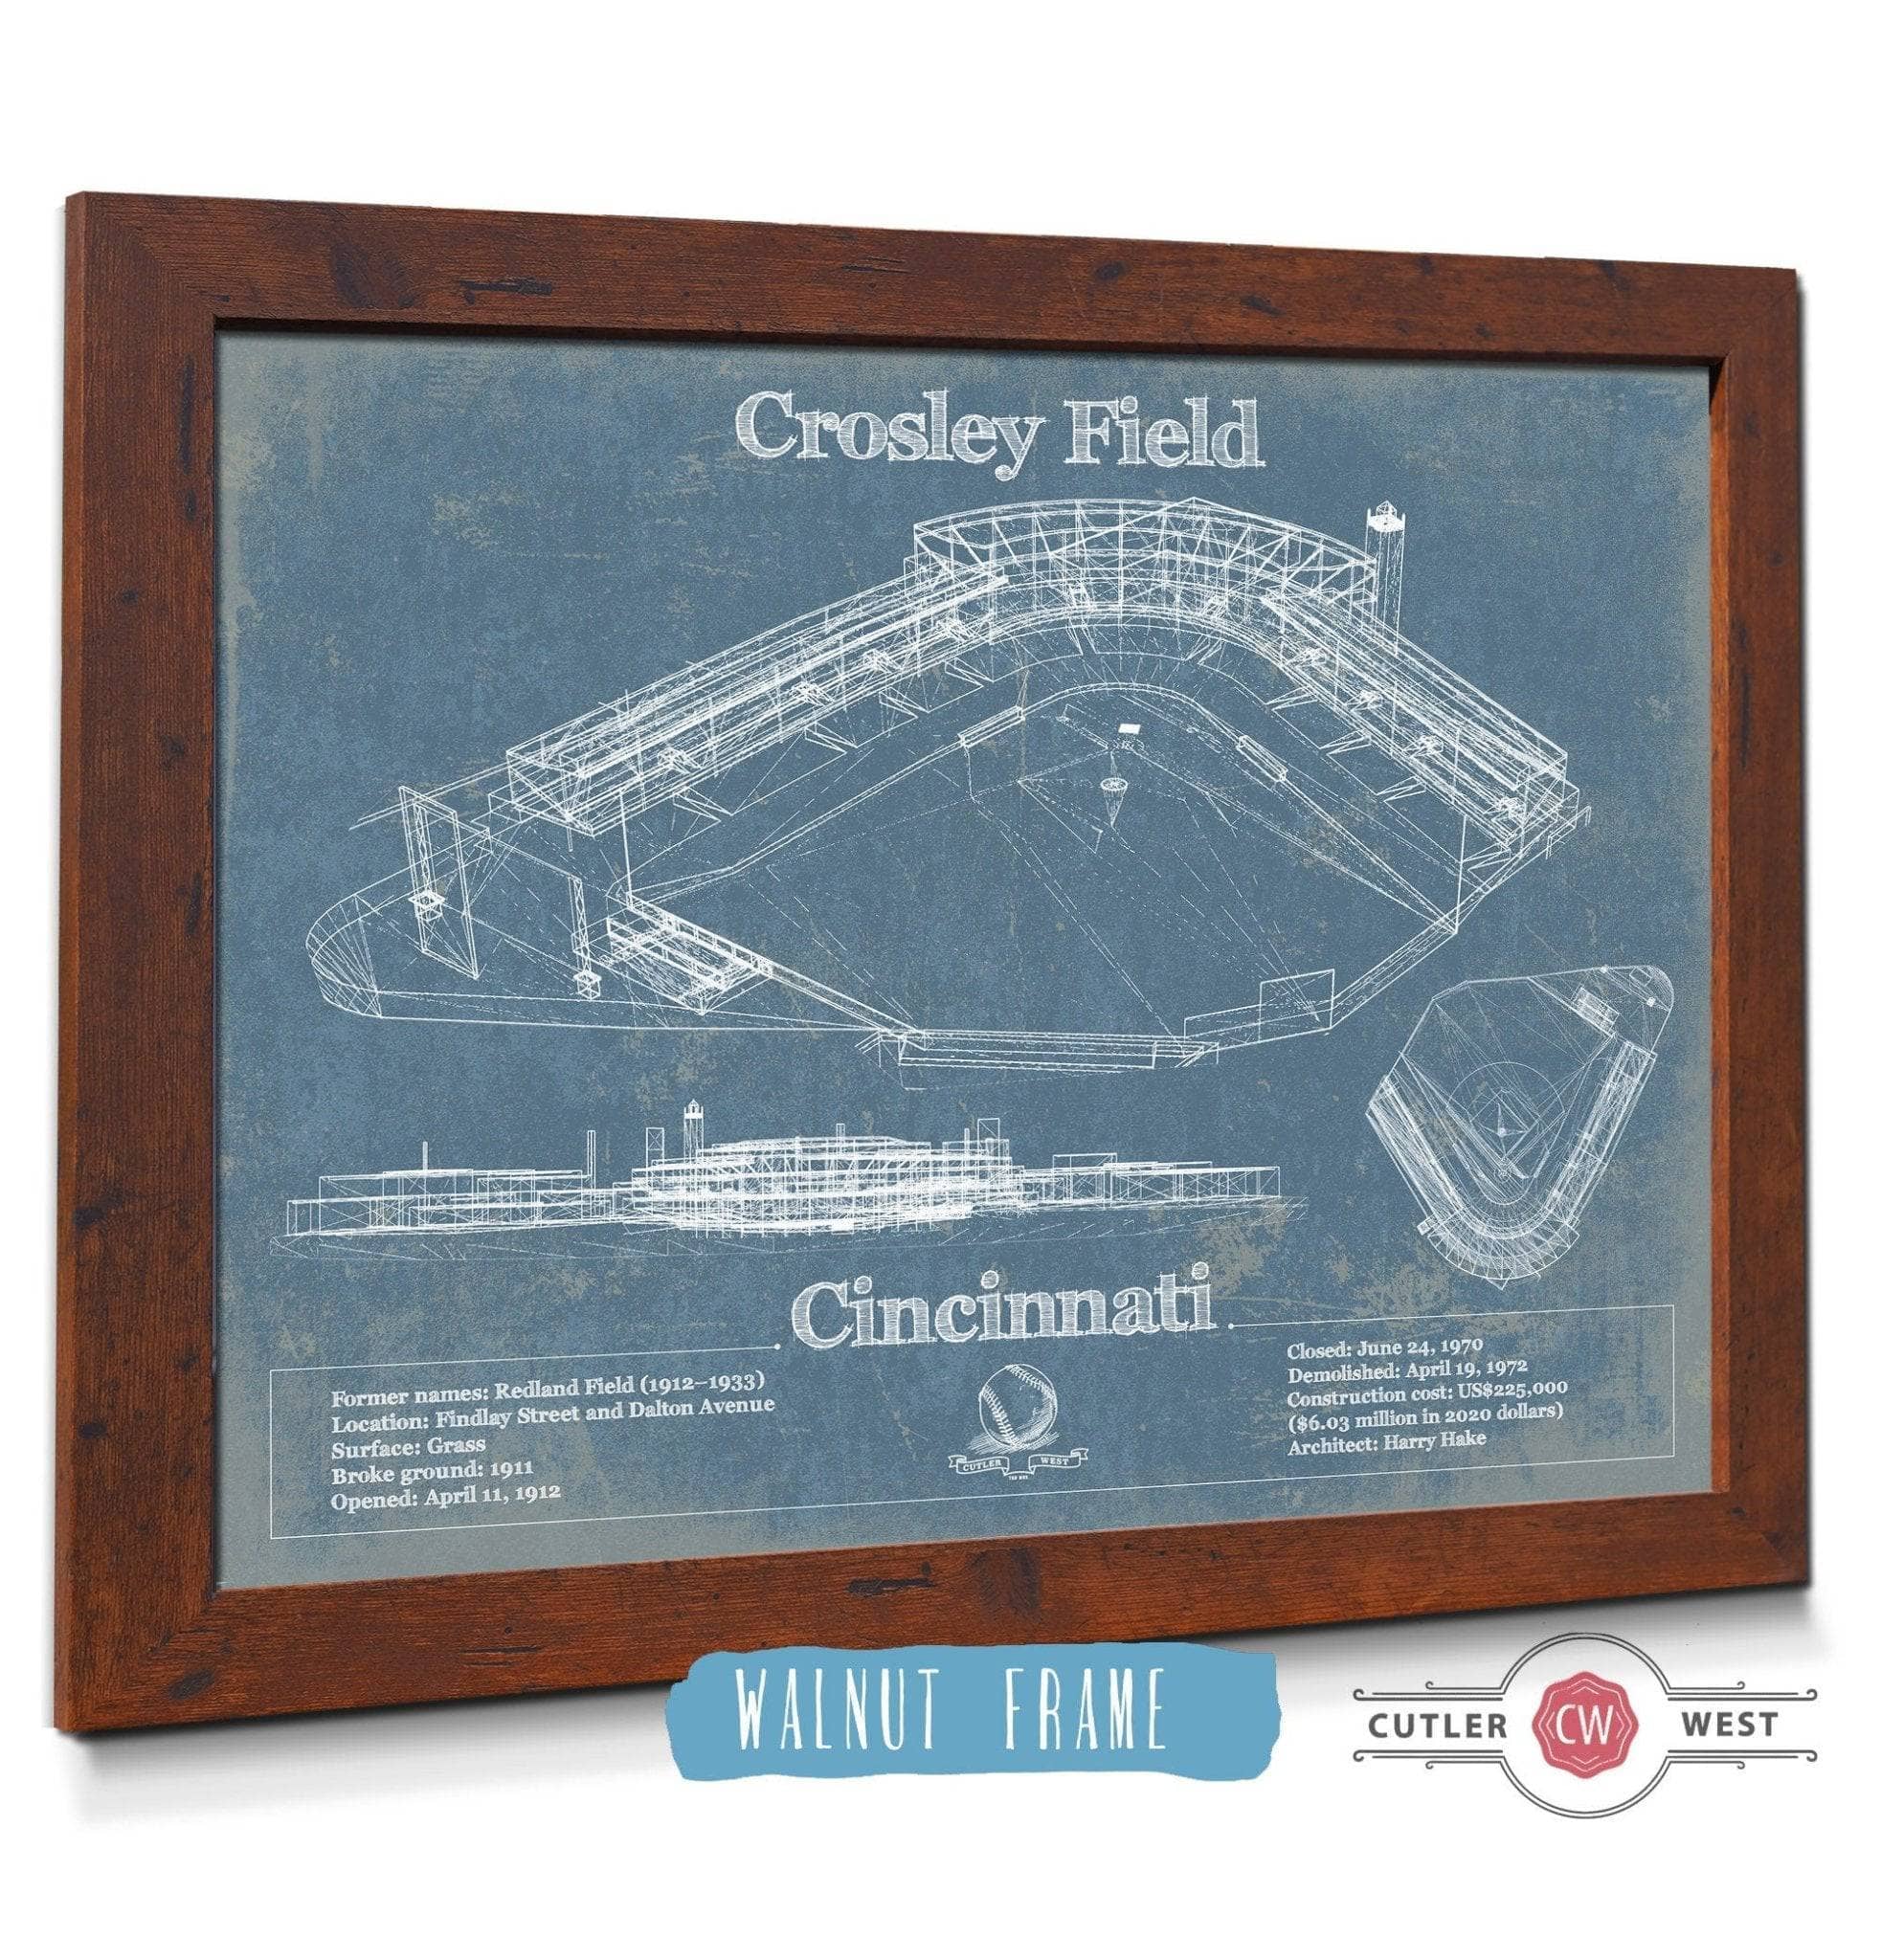 Cutler West Baseball Collection Crosley Field - National League's Cincinnati Reds Vintage Baseball Fan Print